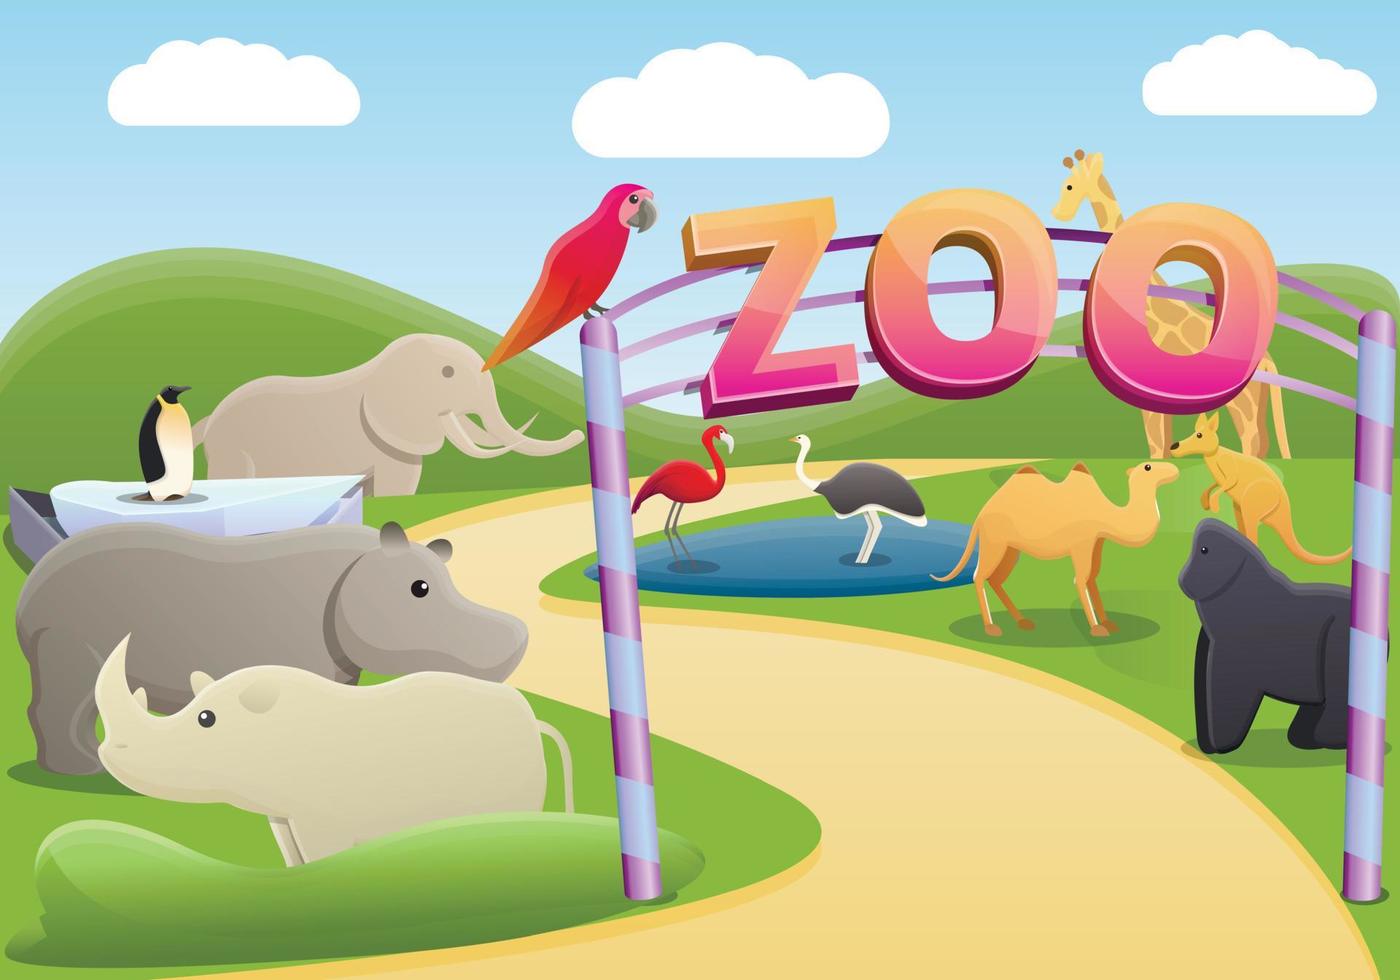 park zoo koncept bakgrund, tecknad stil vektor